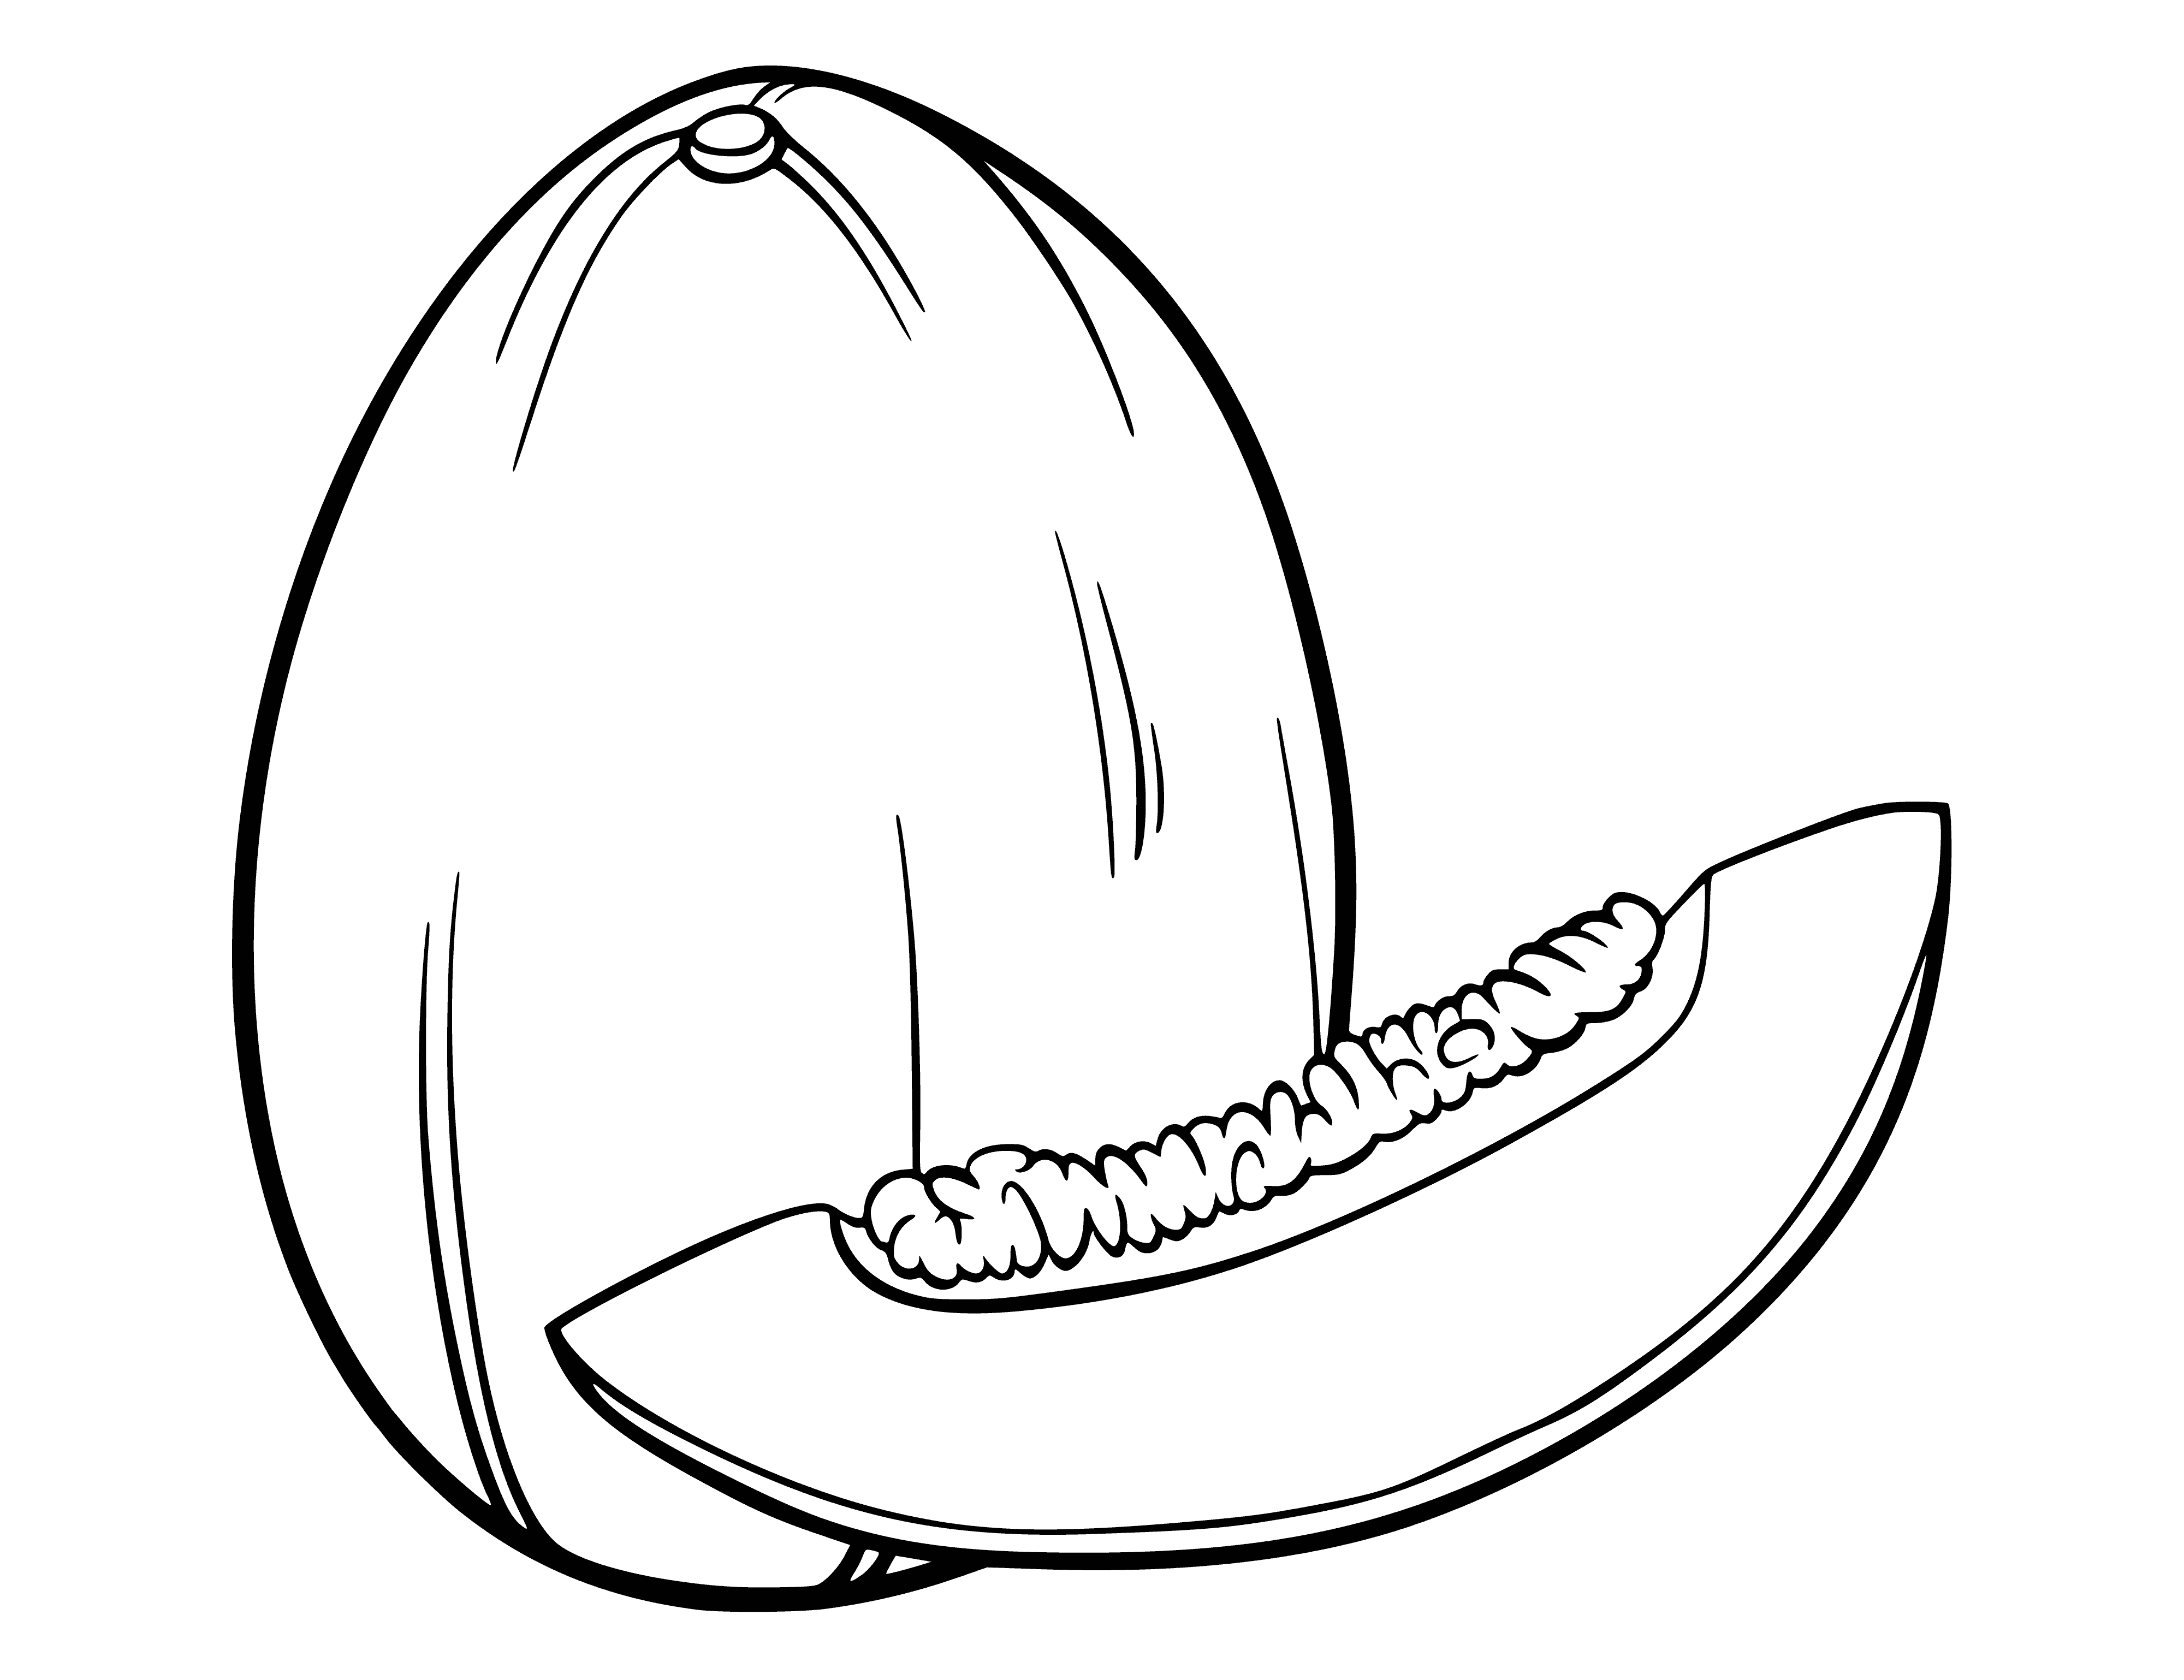 Melon kolorowanka